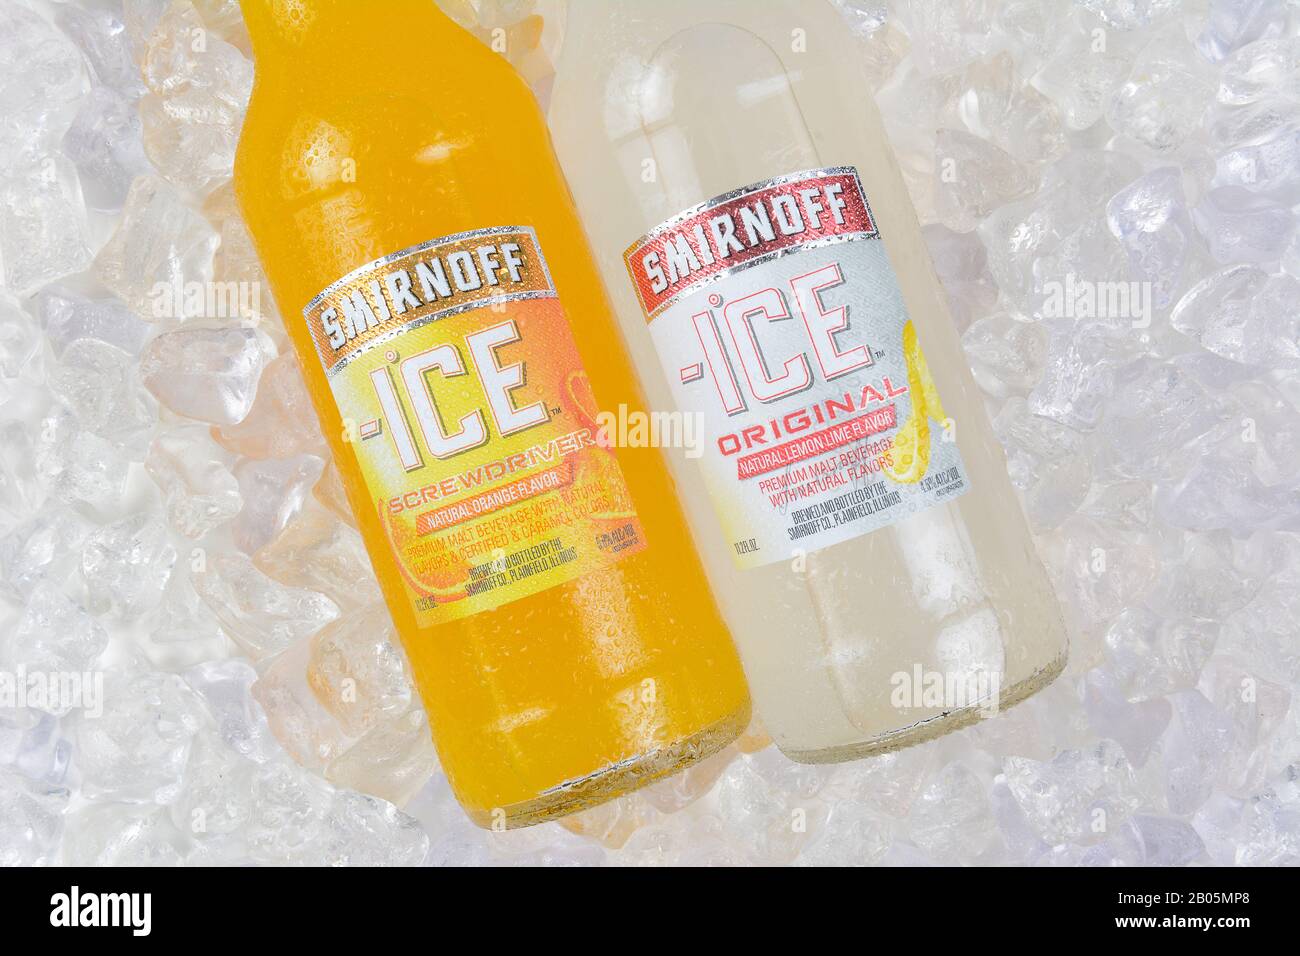 Irvine, CA - 4 GENNAIO 2018: Originale Smirnoff Ice e cacciavite. L'Originale bevanda Malt Premium Flavoured con un delizioso agrumi Foto Stock